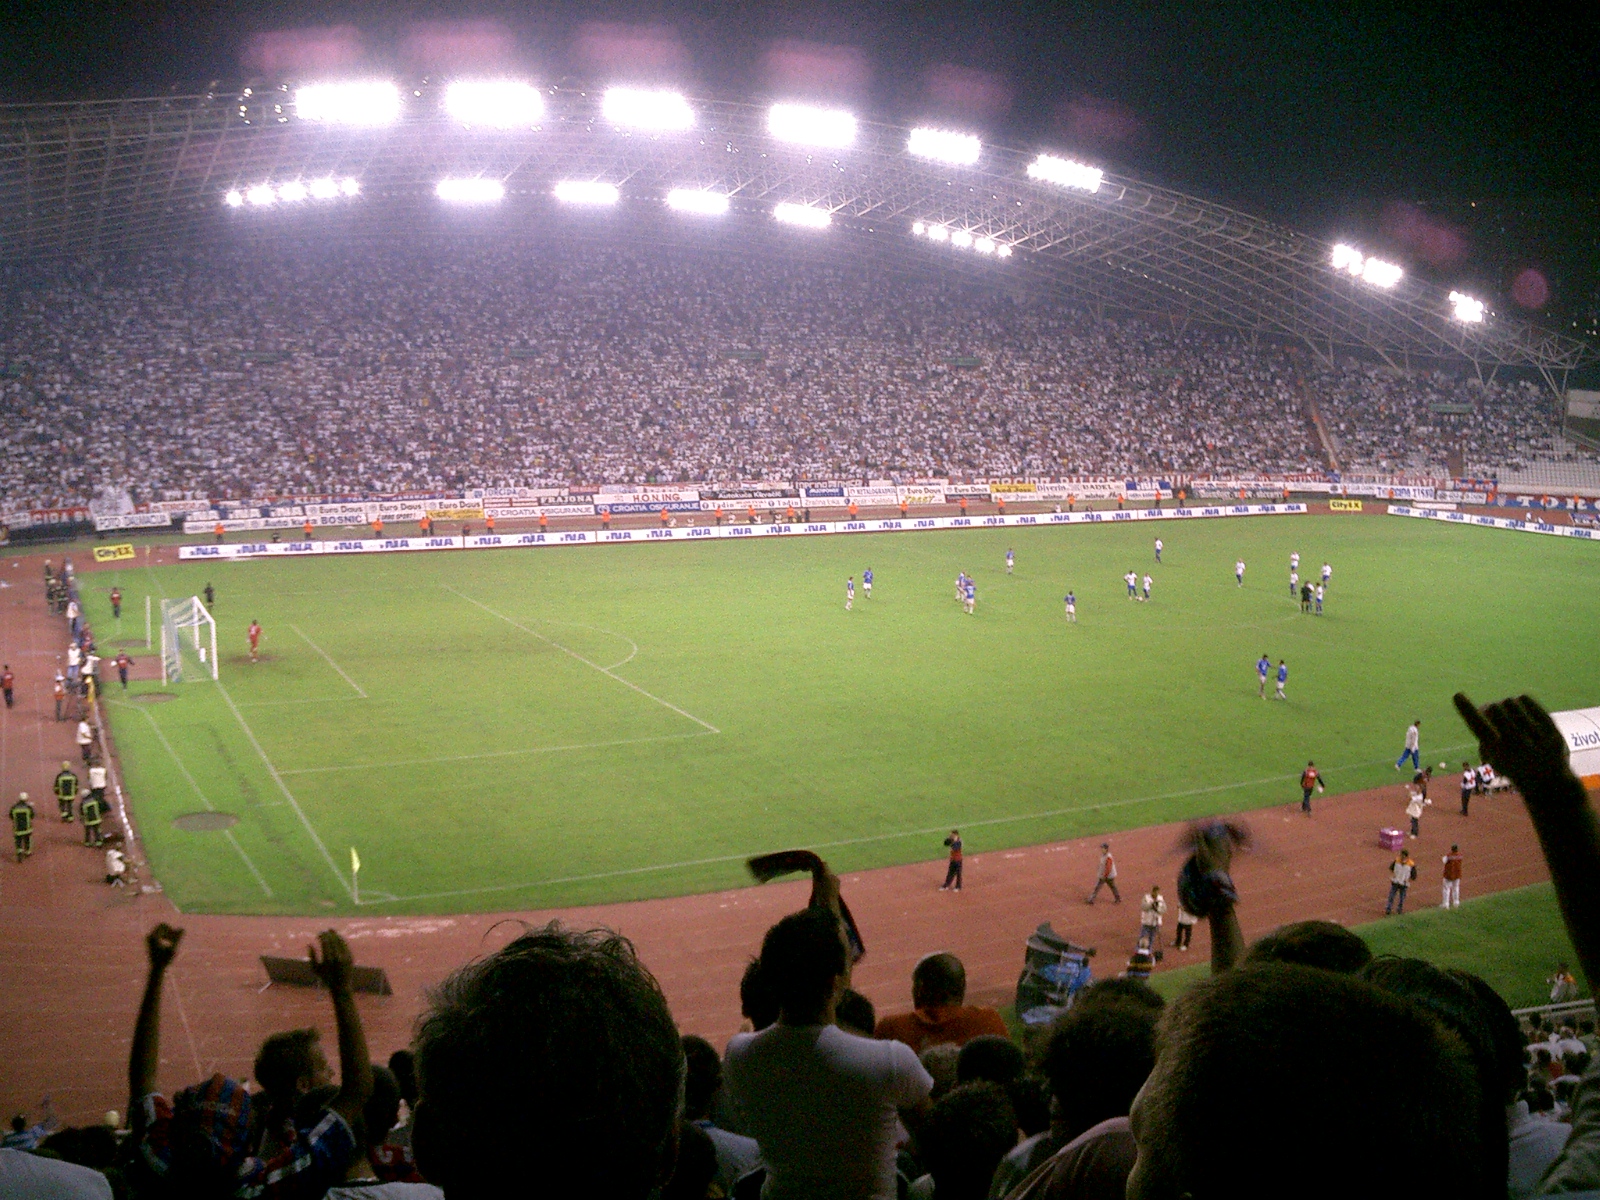 Hajduk Split v Dinamo Zagreb: Flares, fires, faith & football at Croatia's  'Eternal derby' - BBC Sport